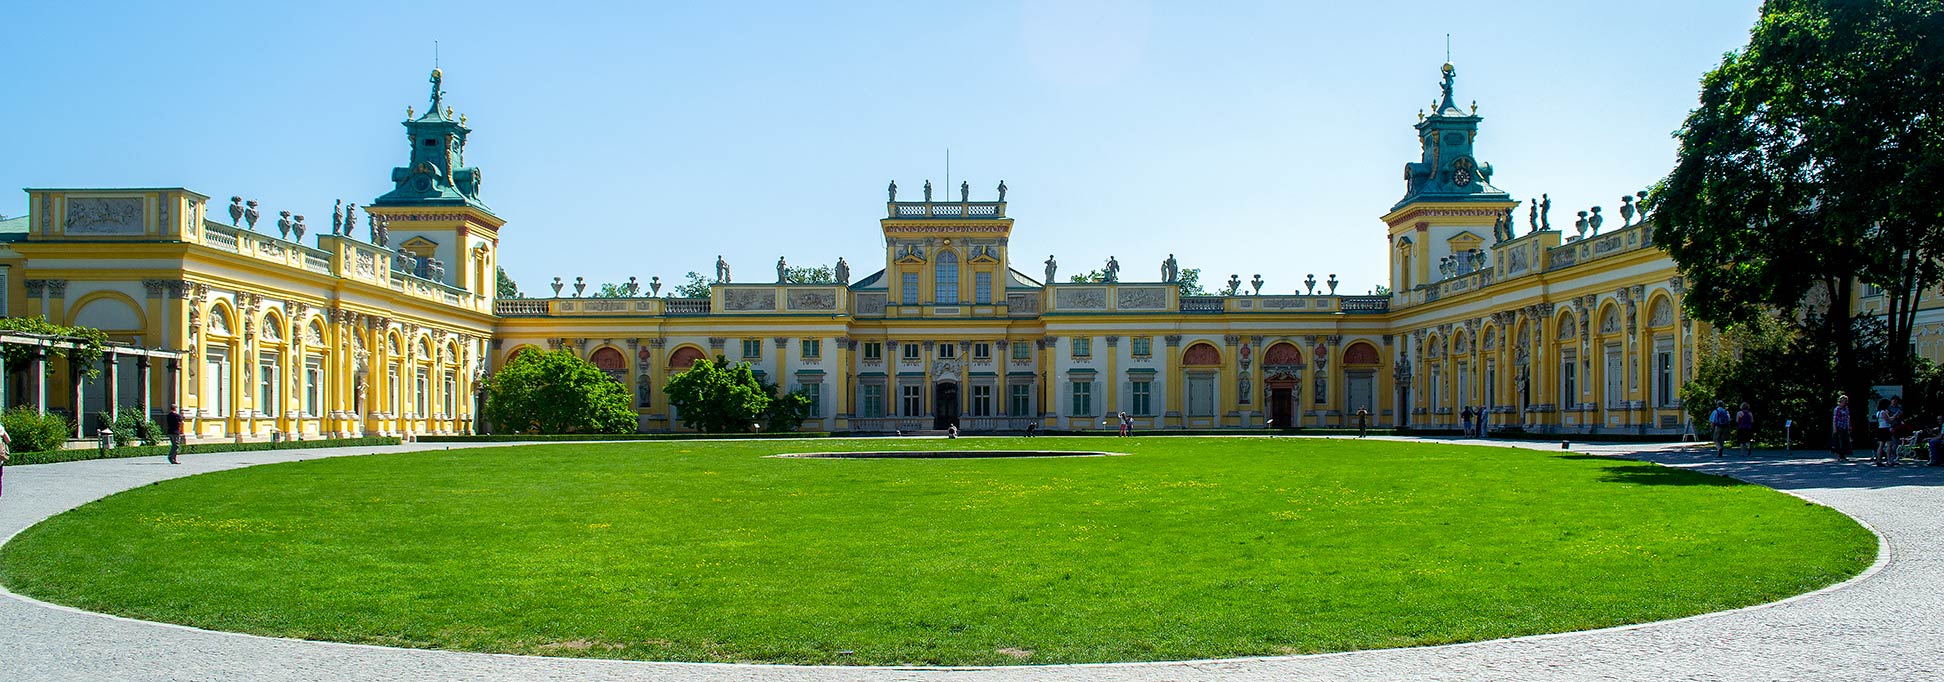 Wilanów Palace in Warsaw